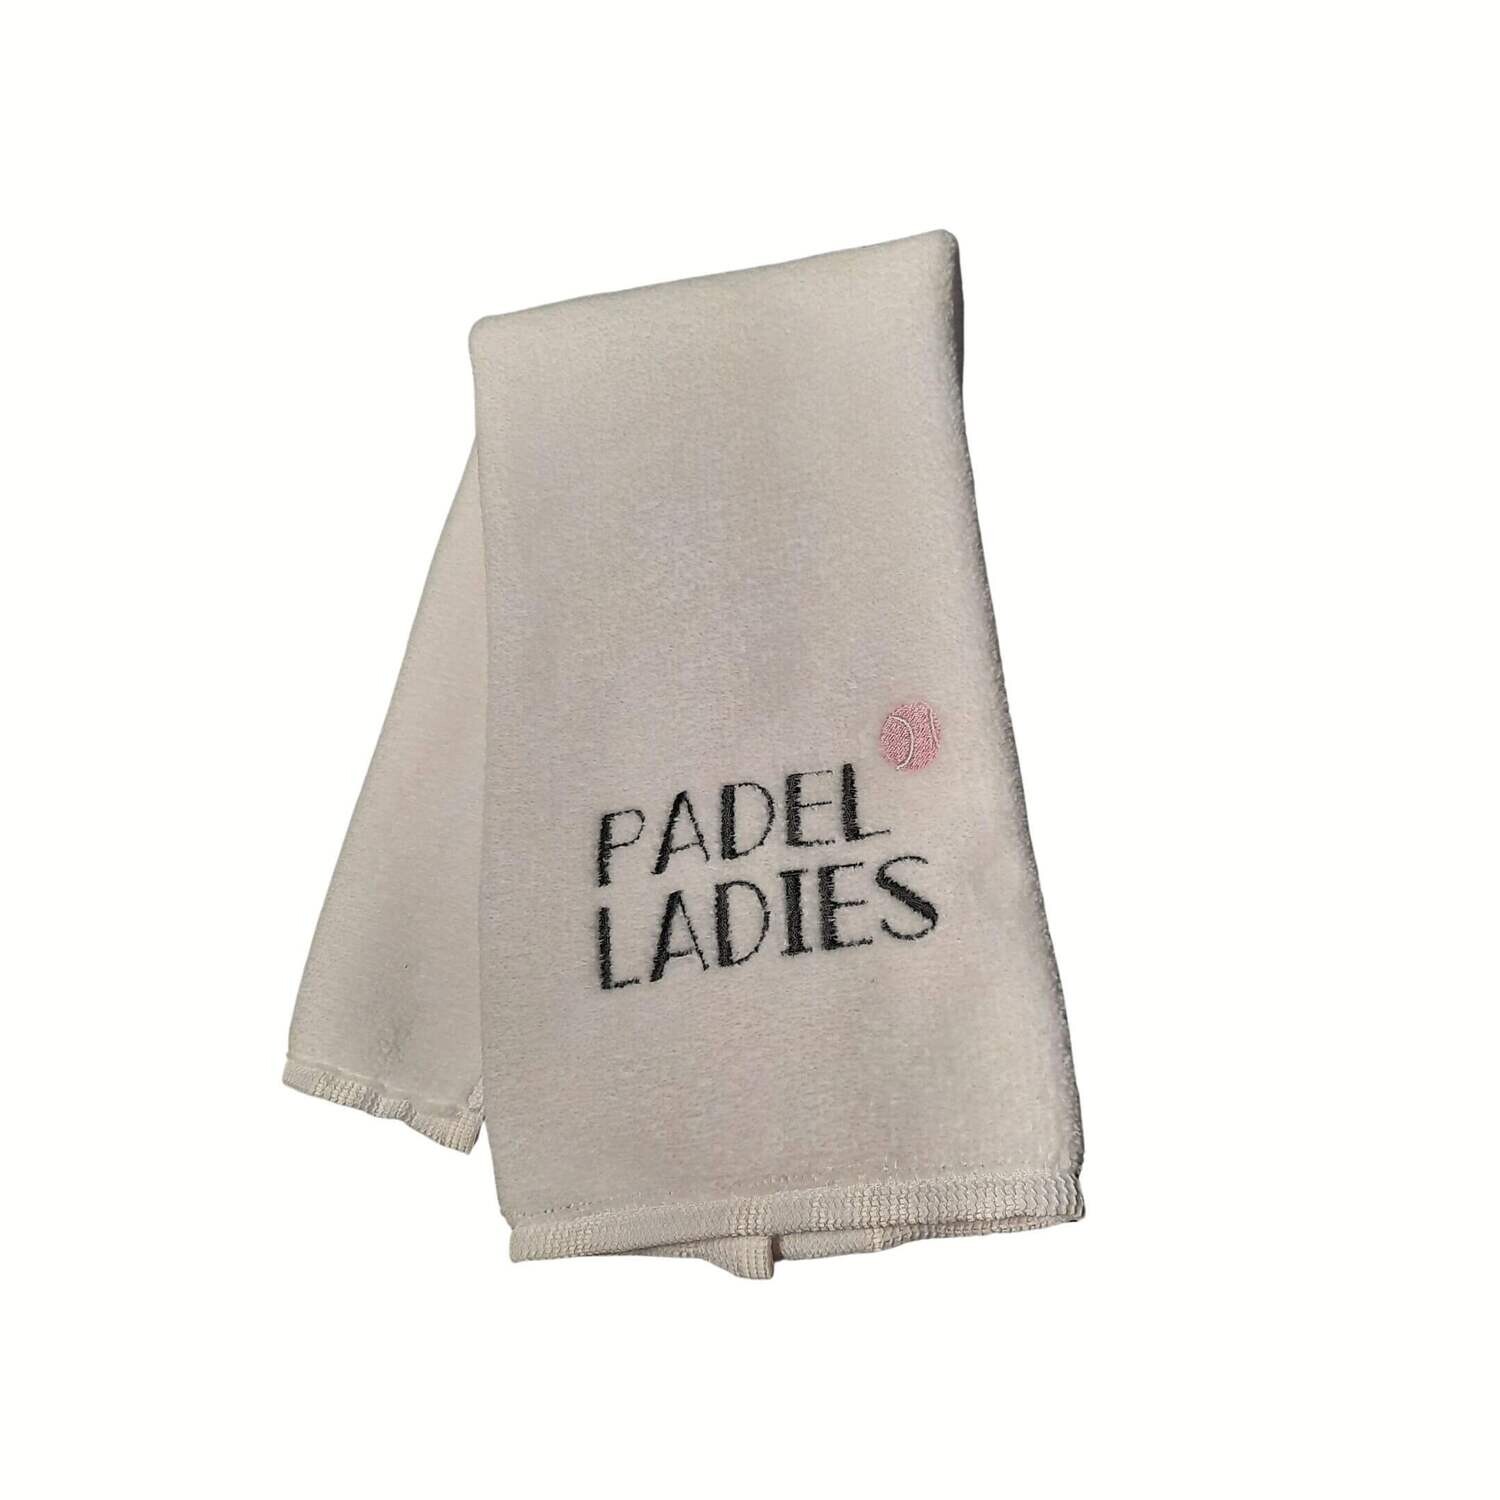 Padel Ladies towel